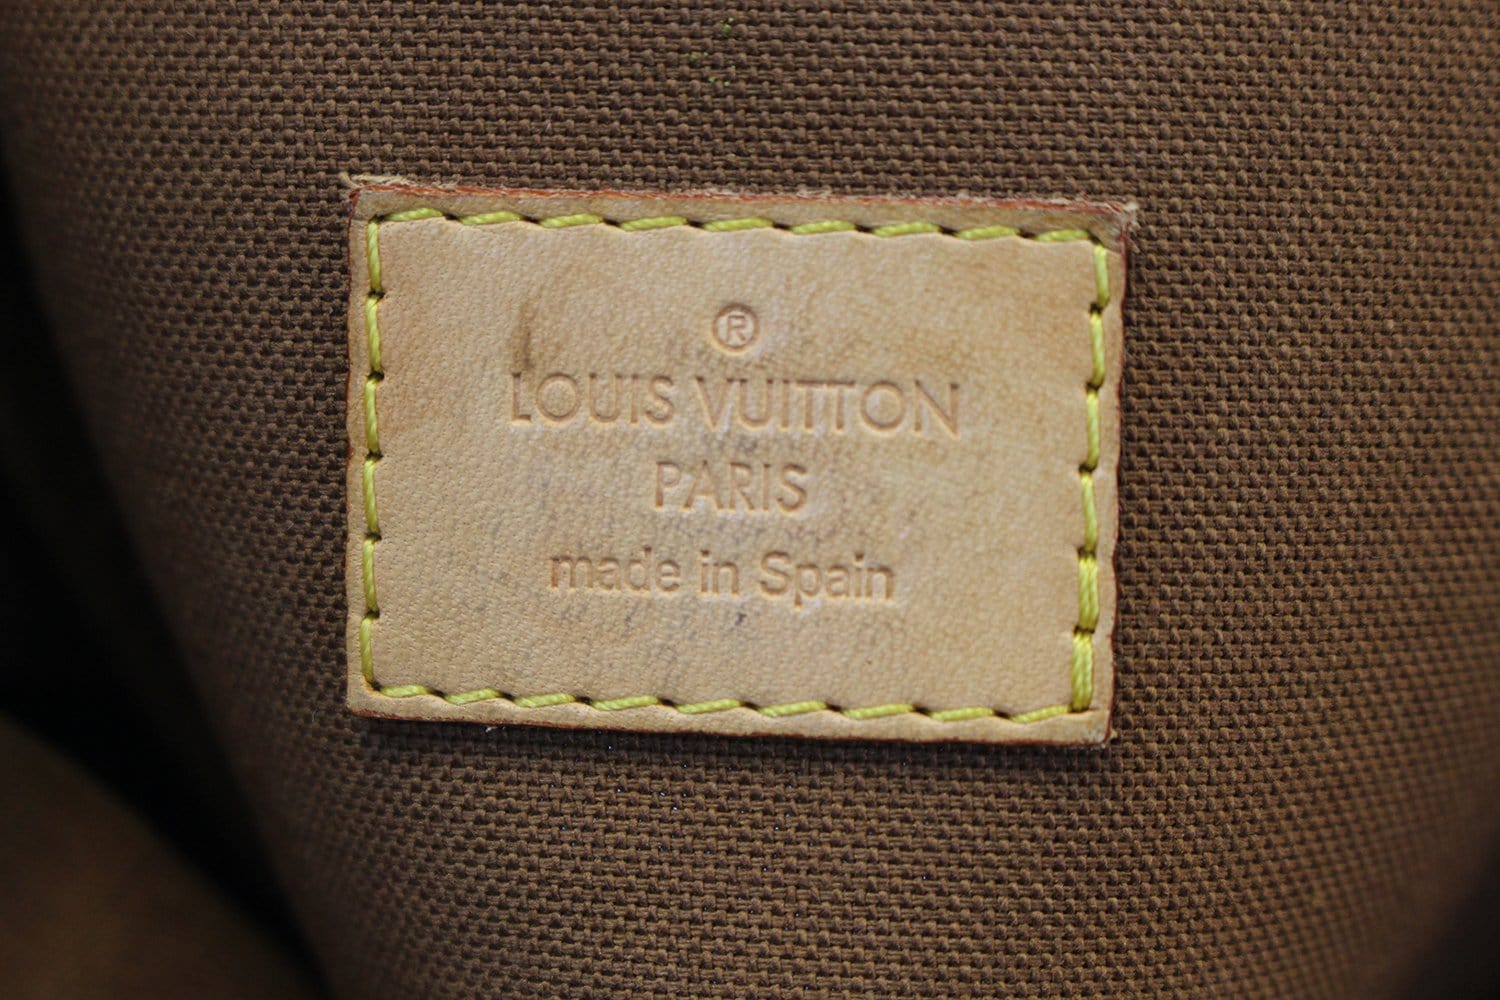 Louis Vuitton Monogram Odeon GM Crossbody Bag 862980